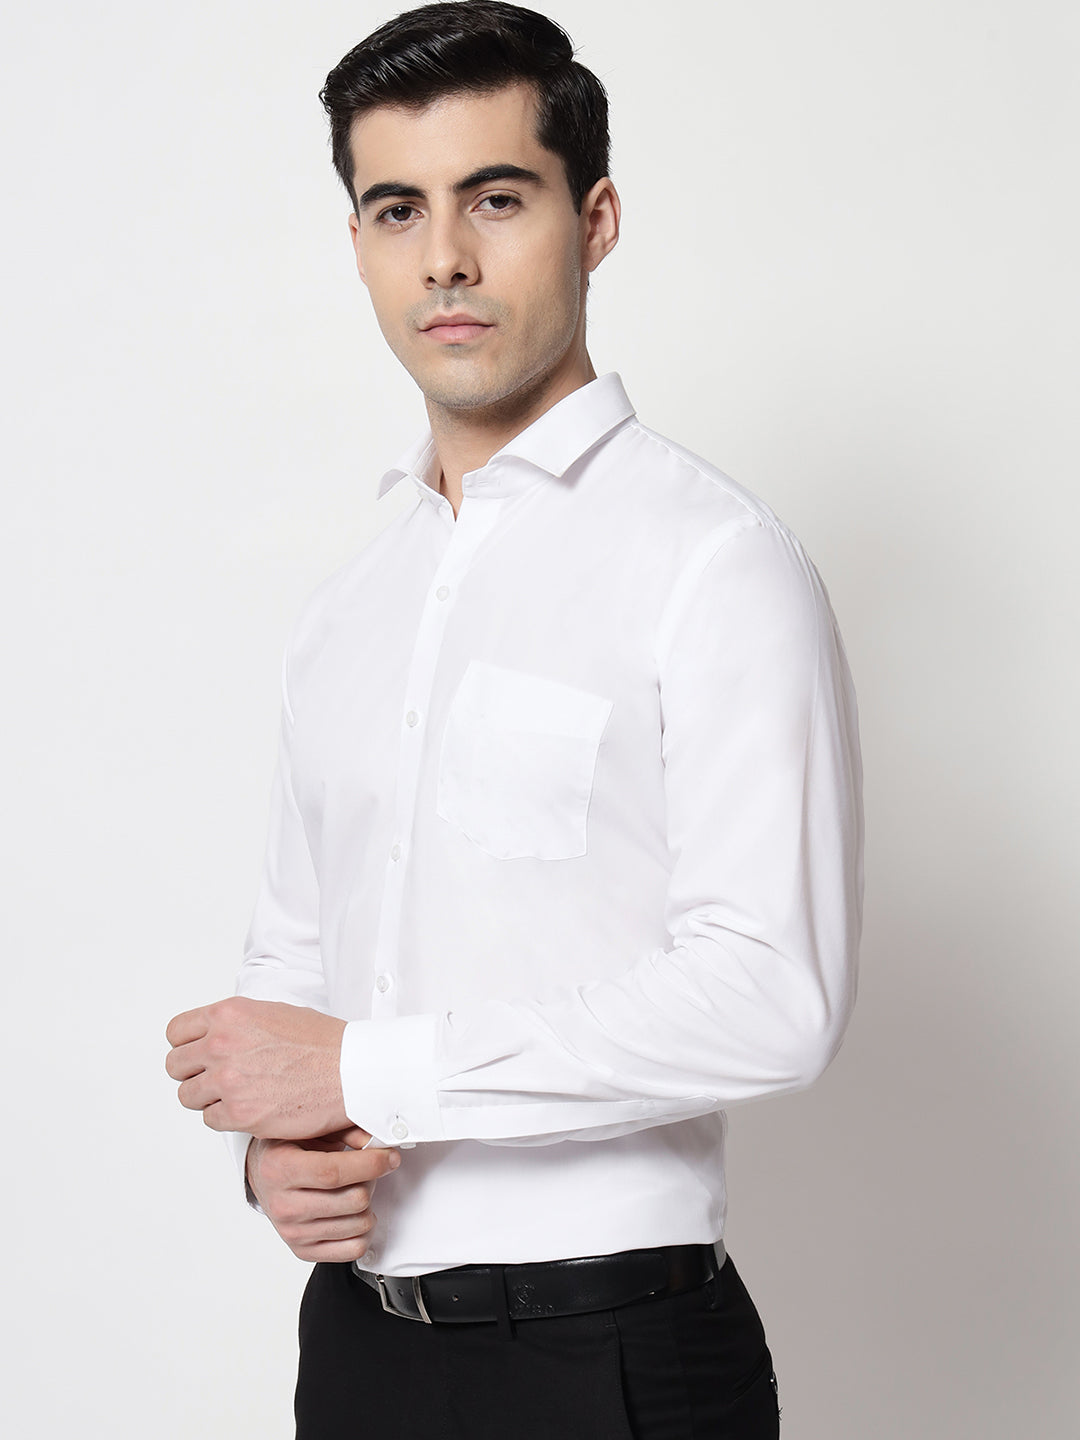 Black & White Men's Formal Cufflink Shirt White-1